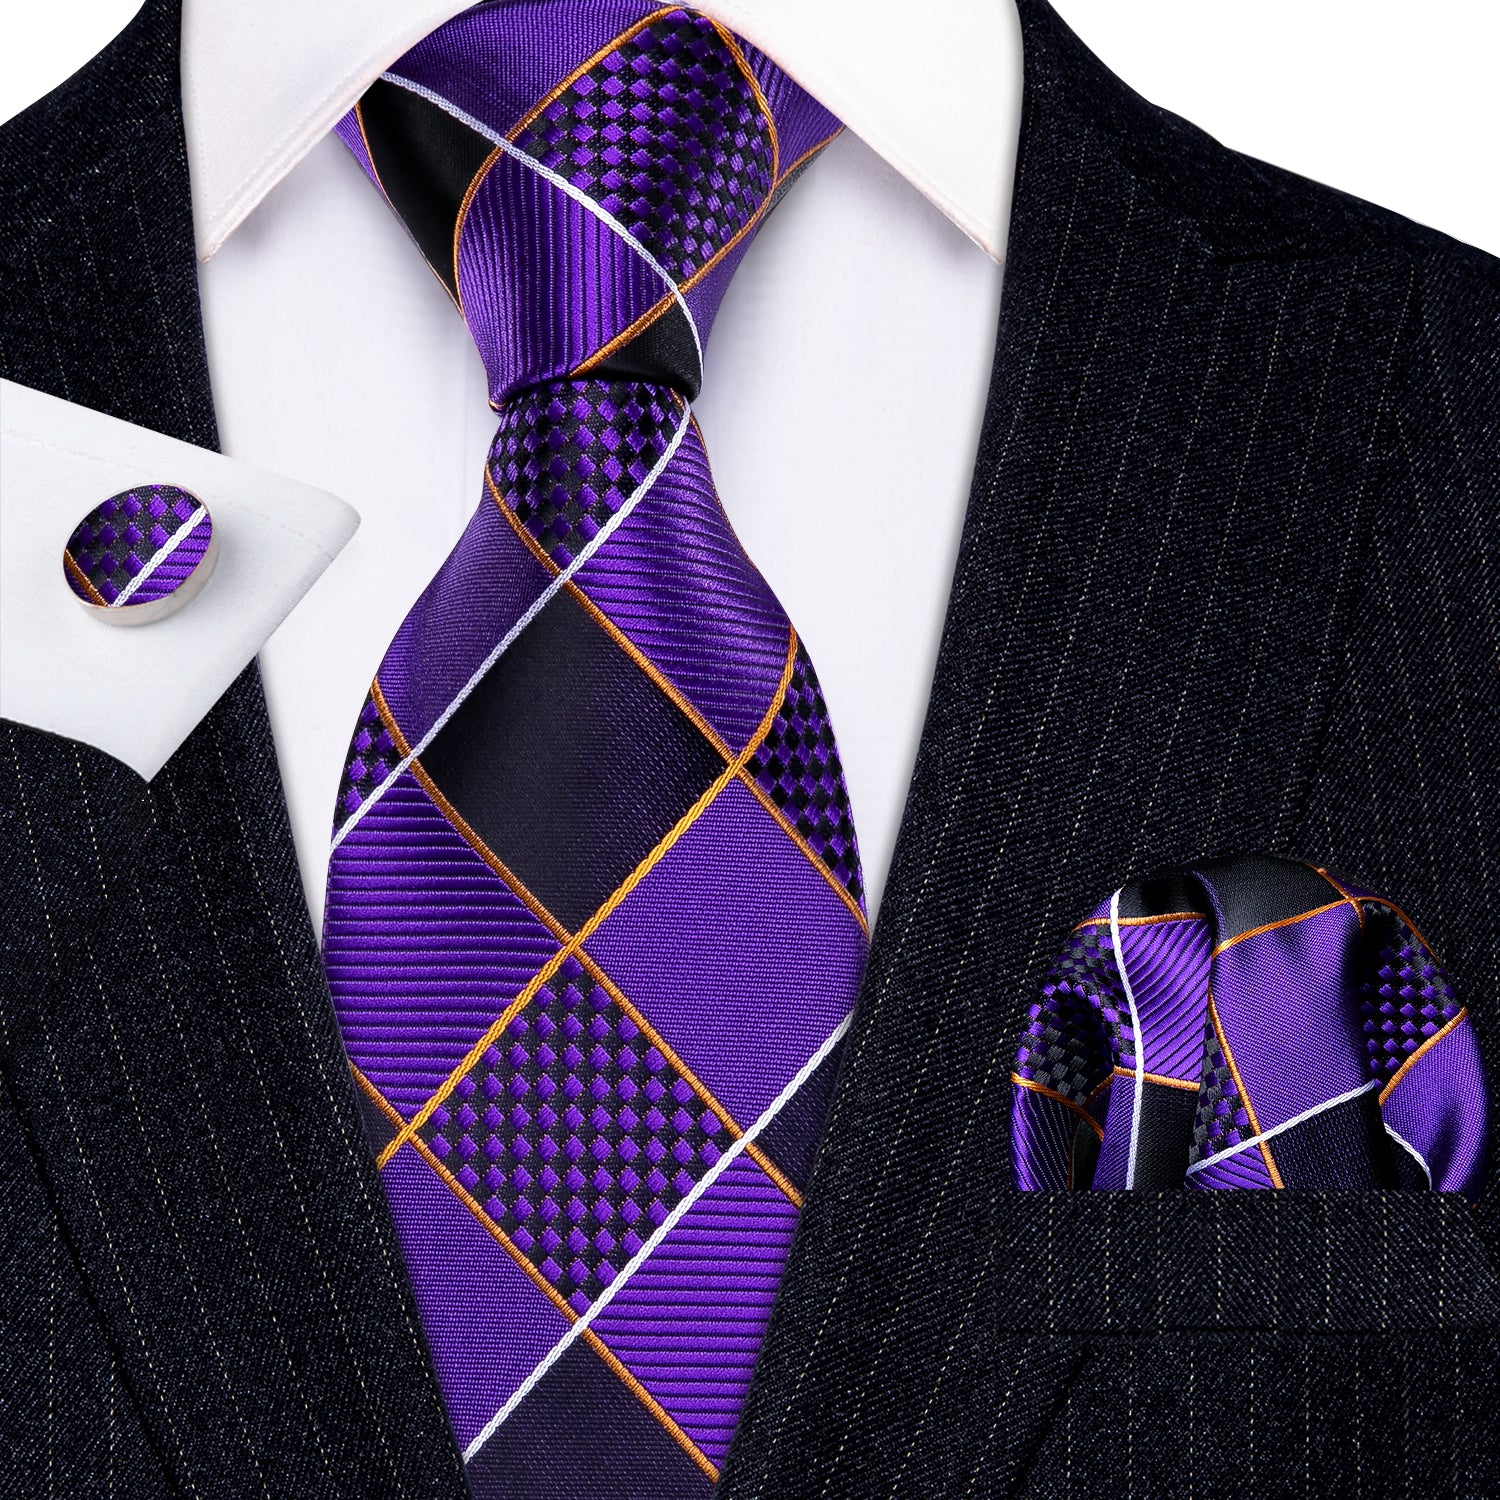 New Purple Geometry Plaid Silk Tie Hanky Cufflinks Set